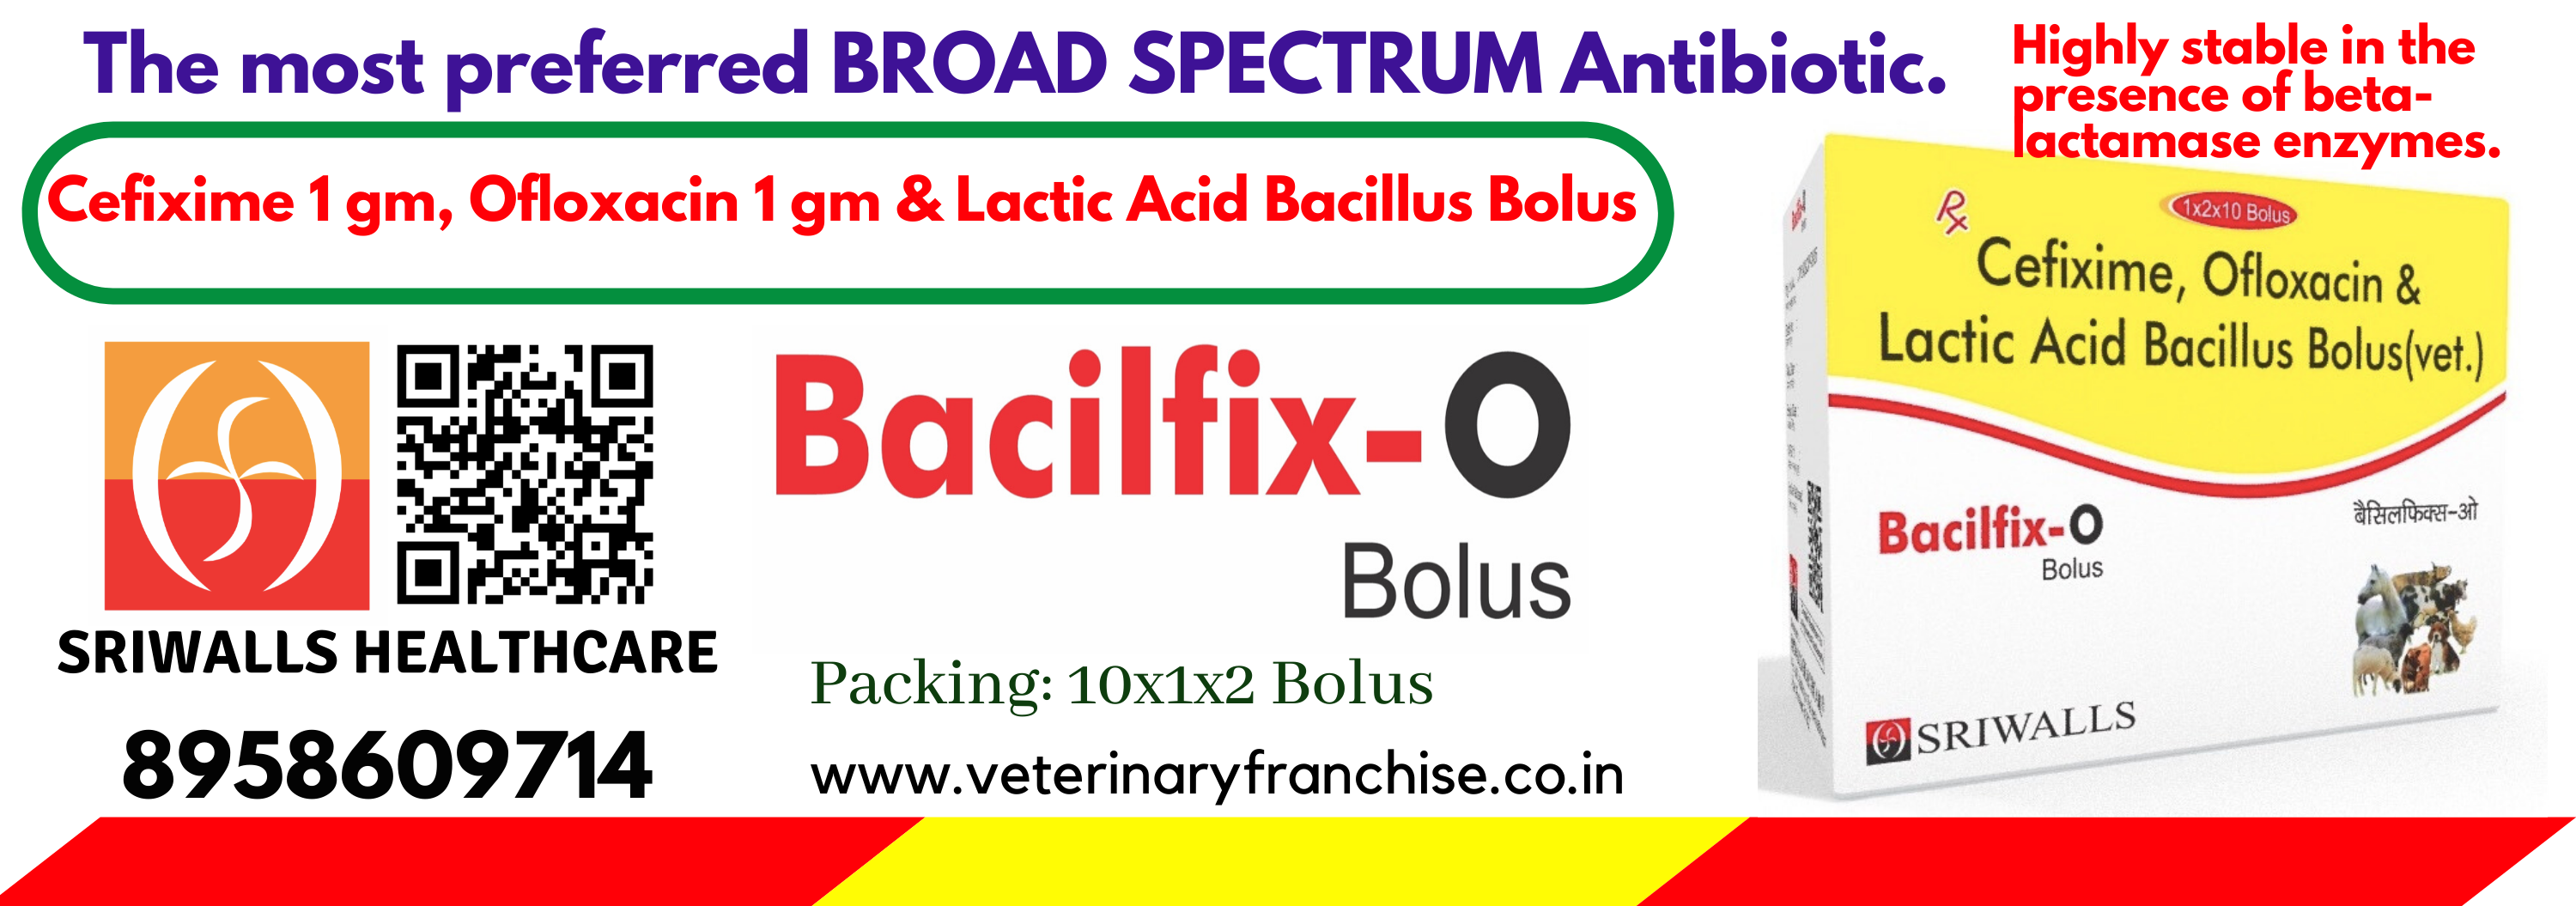 BACILFIX-O CEFIXIME OFLOXACIN LACTIC ACID BACILLUS BOLUS